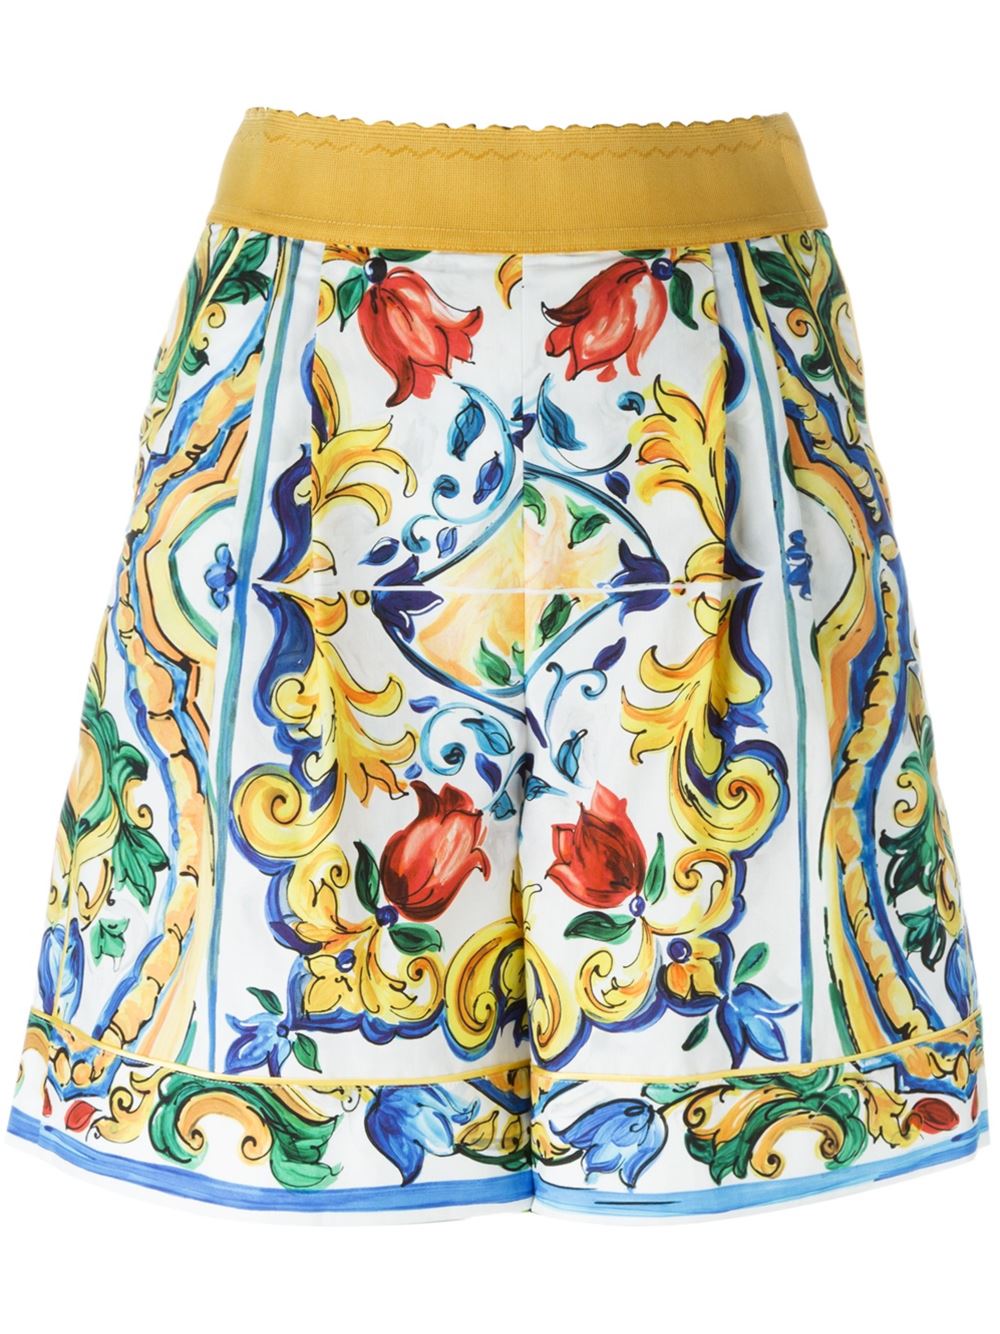 dolce-gabbana-majolica-print-multicolor-shorts – Fashion Bomb Daily